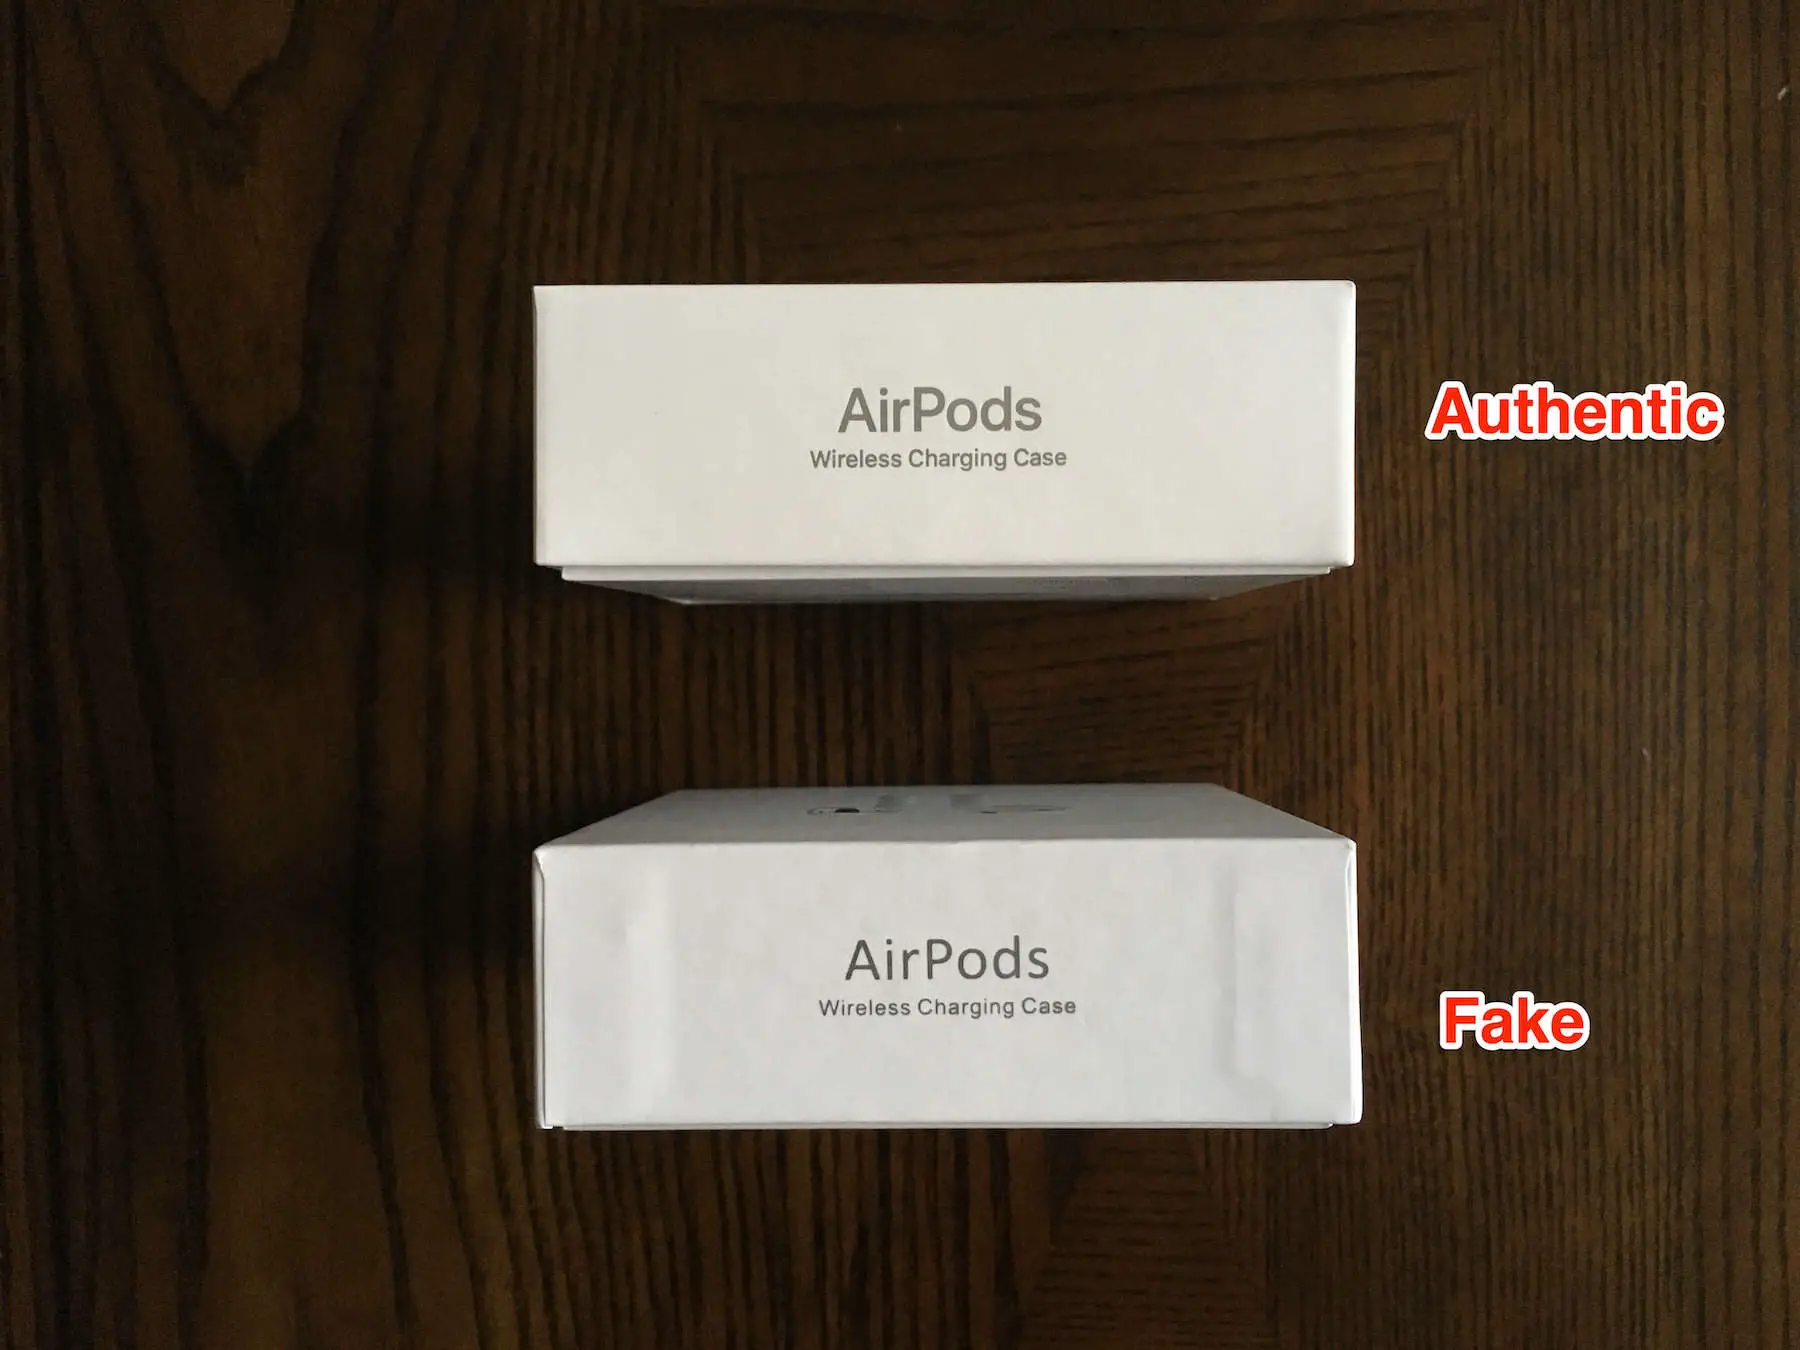 Echte AirPods vs. gefälschte AirPods aufgedruckter Name